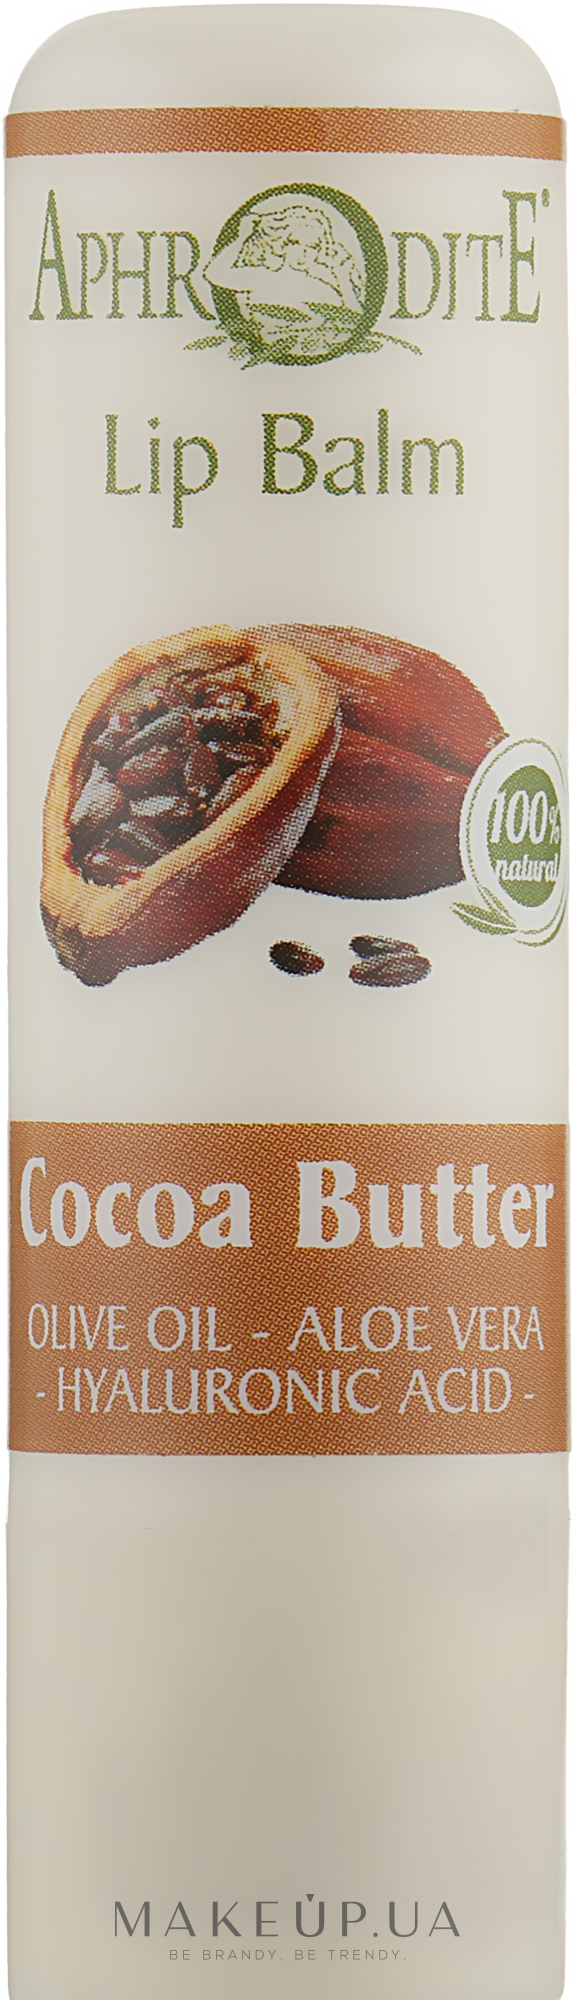 Бальзам для губ с ароматом какао масла SPF 10 - Aphrodite Instant Hydration Lip Balm Cocoa Butter SPF 10 — фото 4g